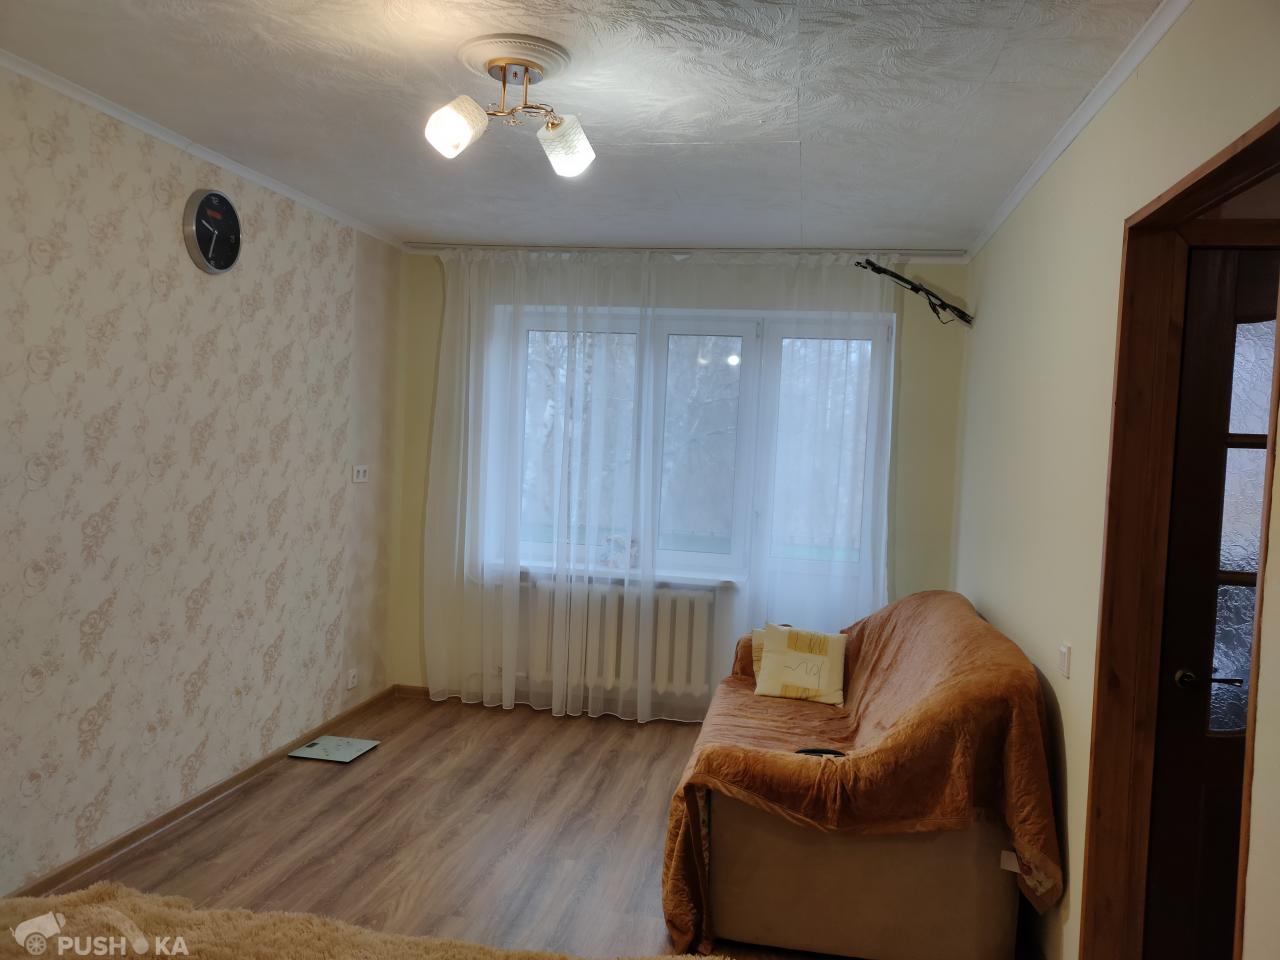 Продаётся 1-комнатная квартира 30.3 кв.м. этаж 4/5 за 4 700 000 руб 